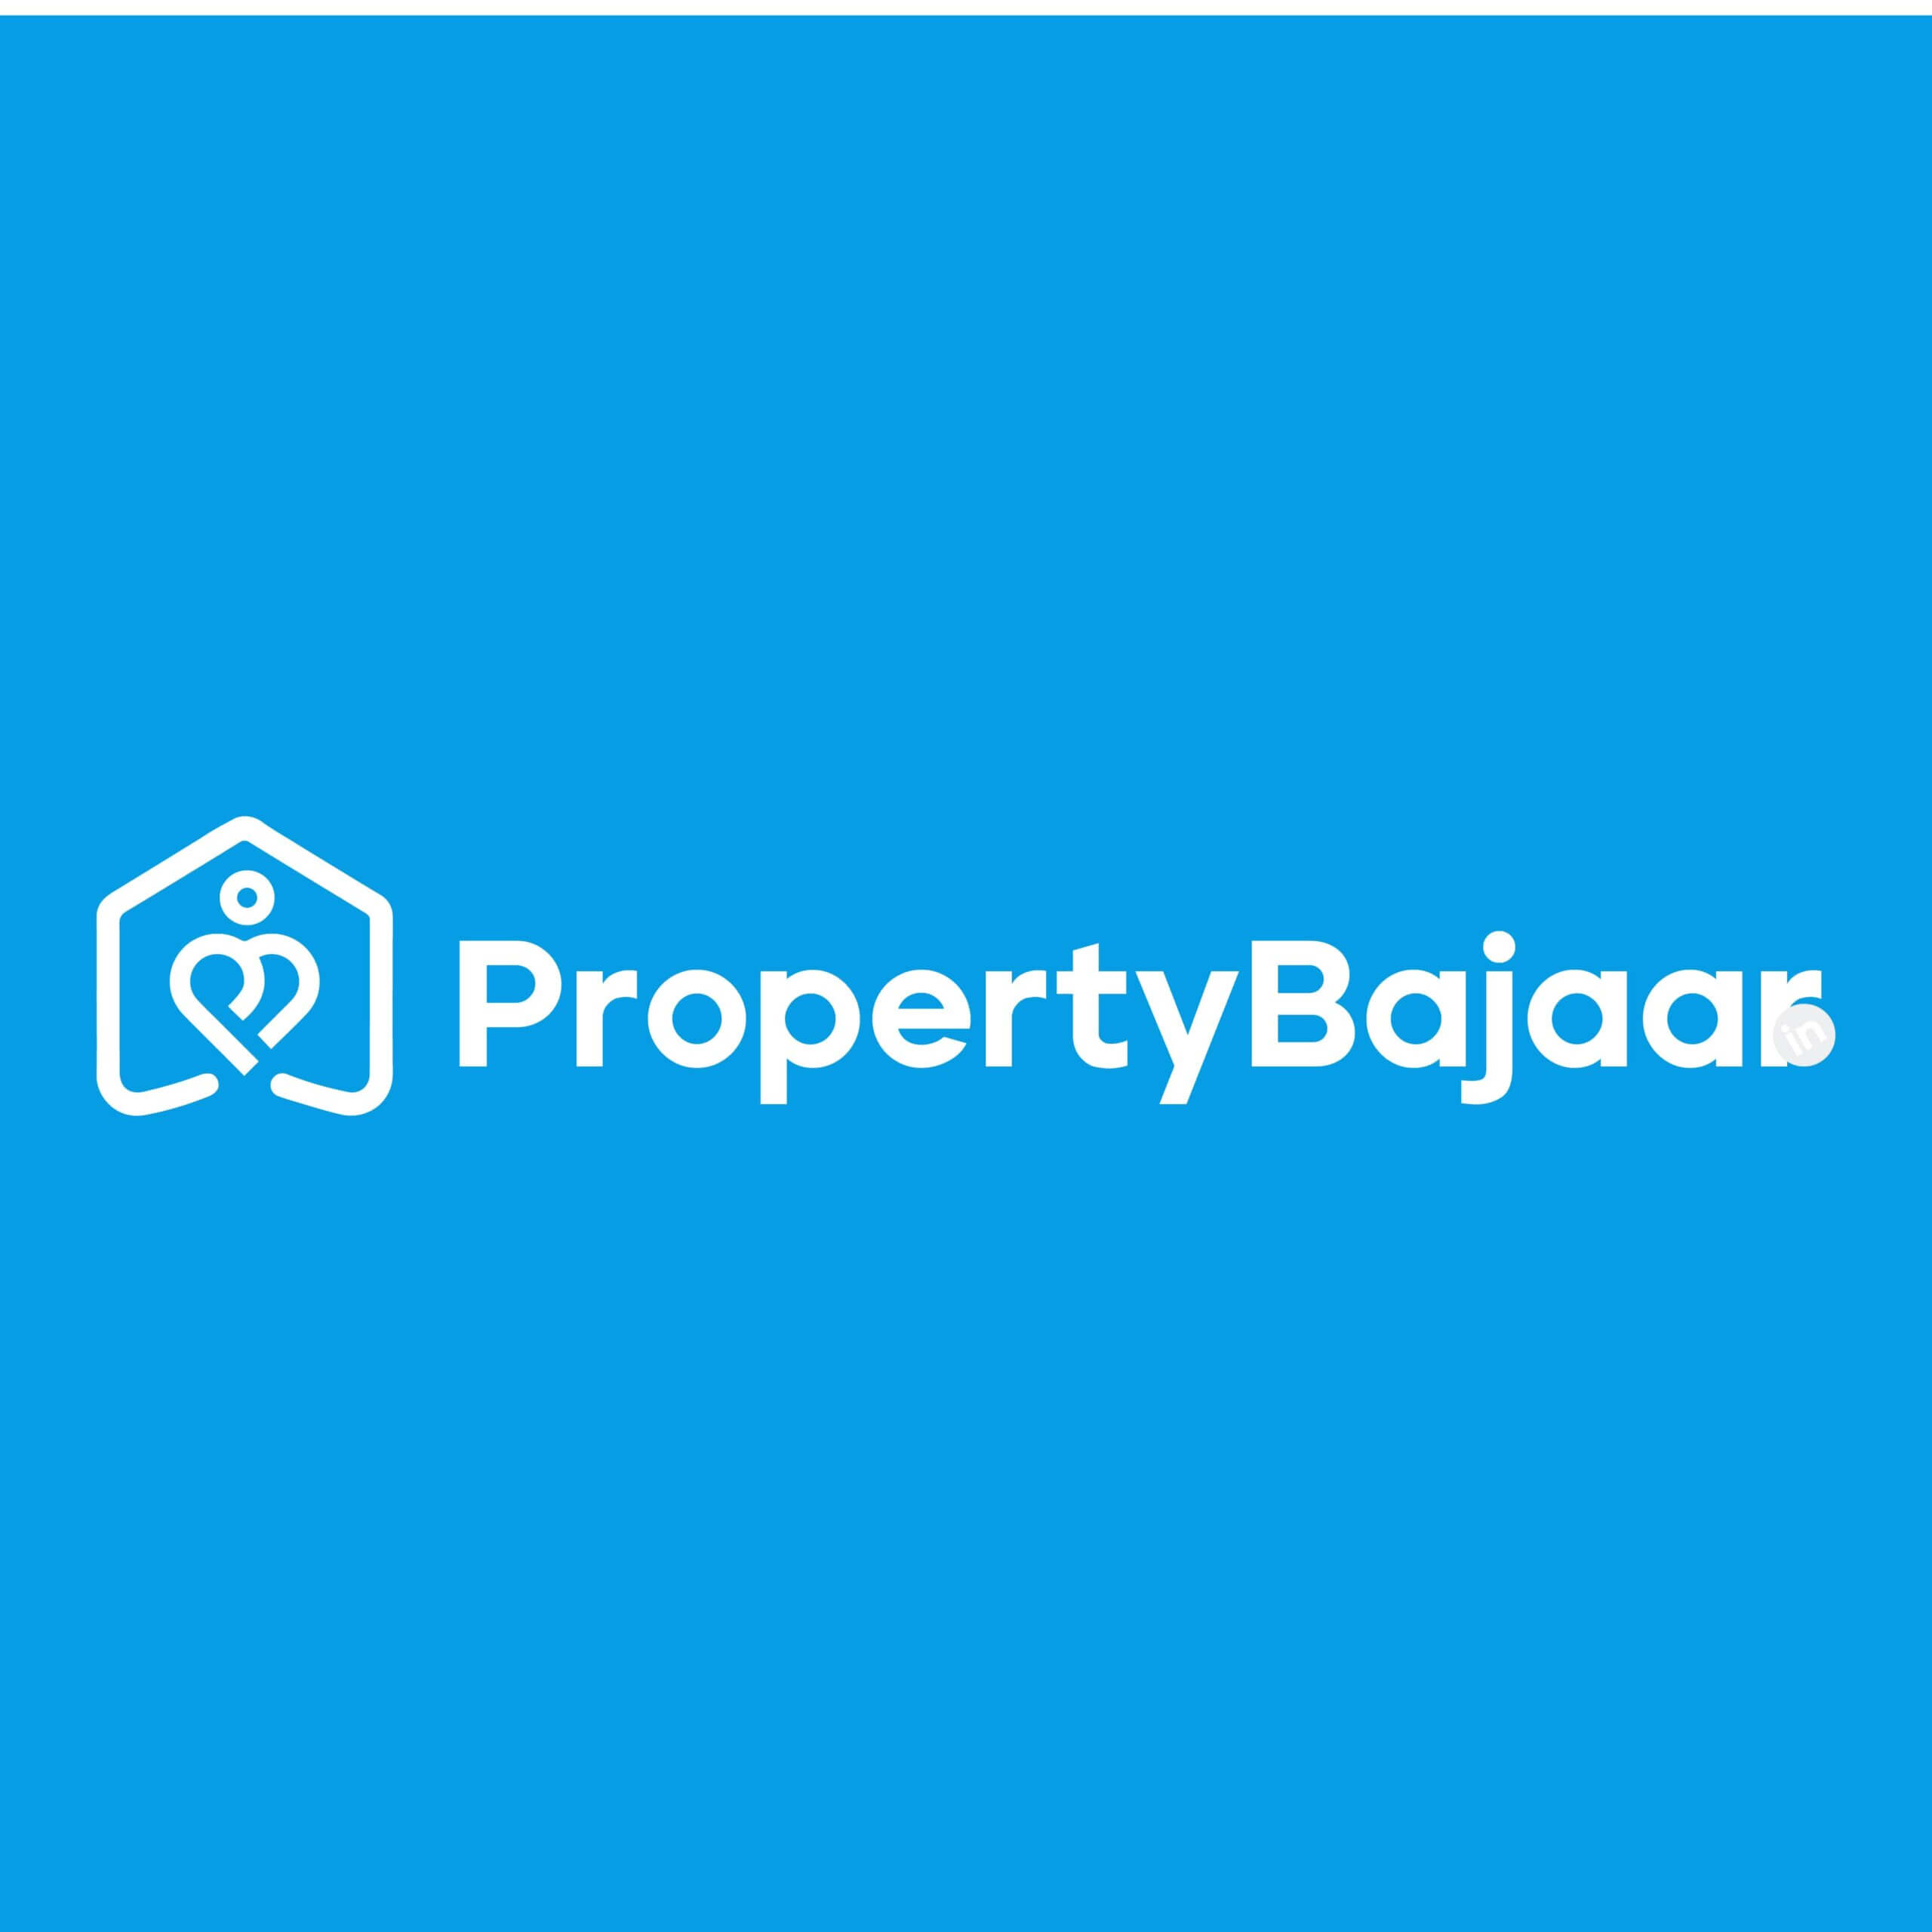 Property Bajaar 1 scaled Logo Design, Famebro media, Famebro Creative Studio, Website Design